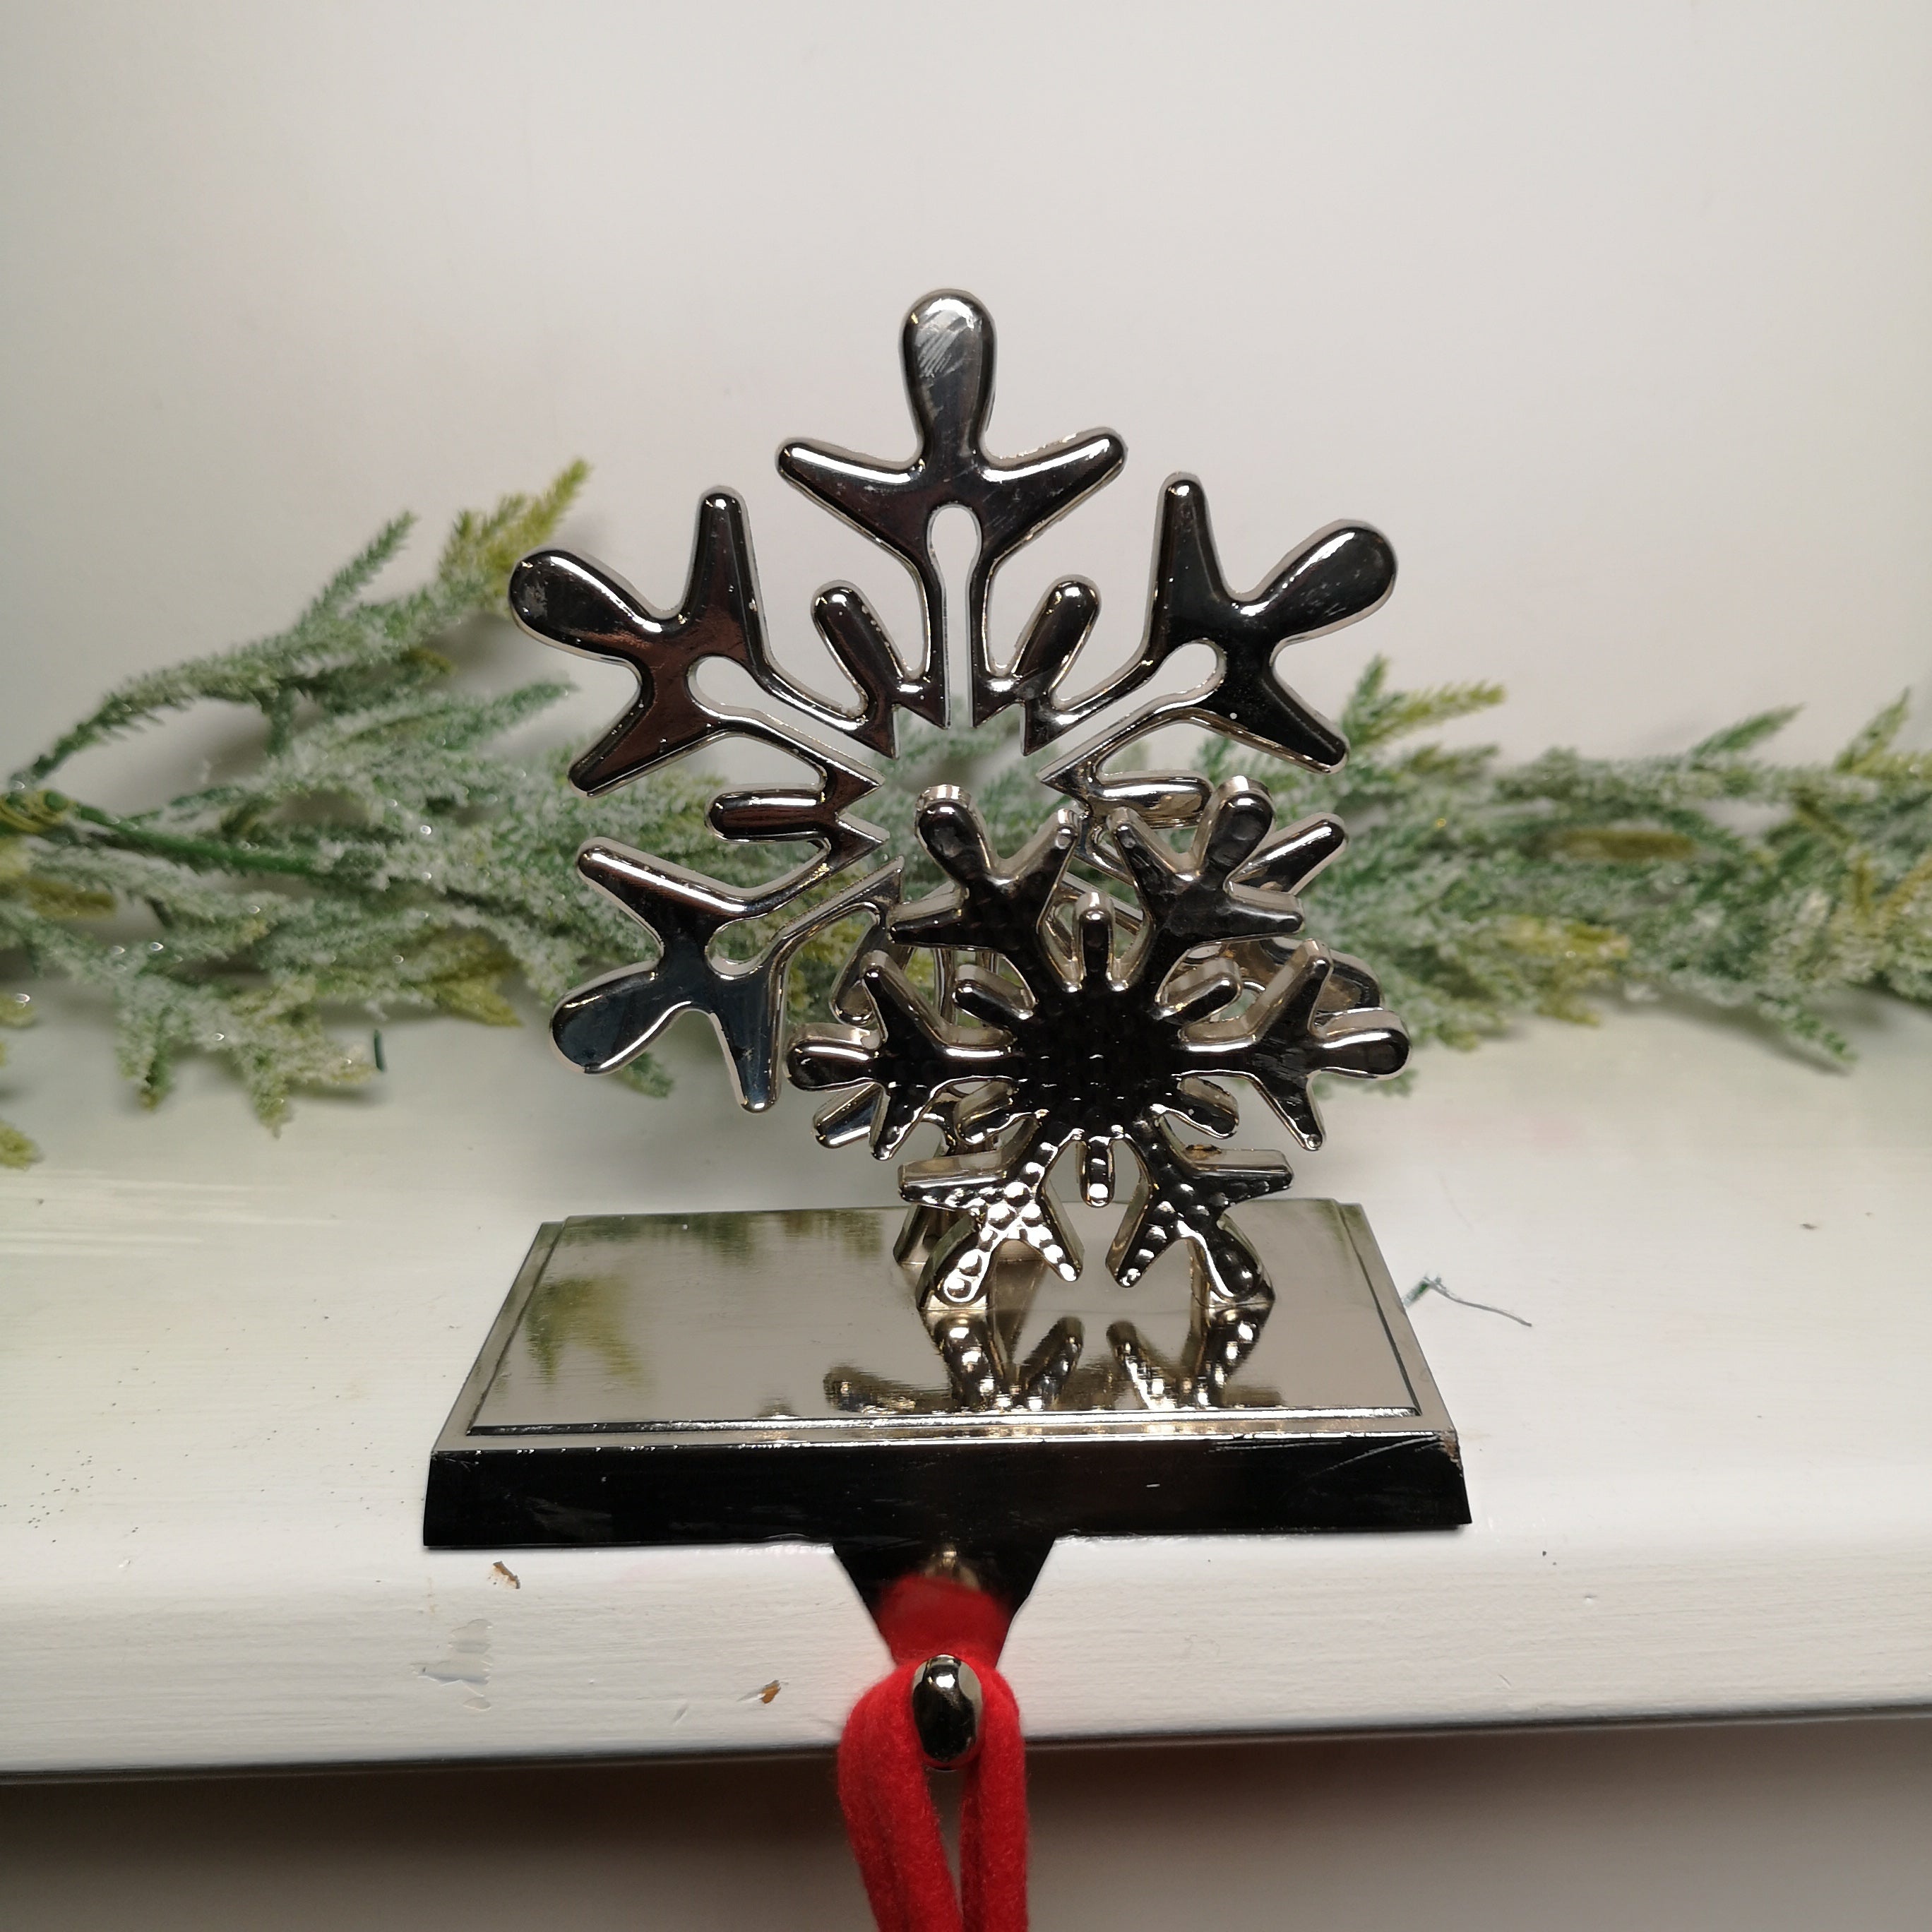 16cm Premier Christmas Stocking Hanger Decoration in Snowflake Design